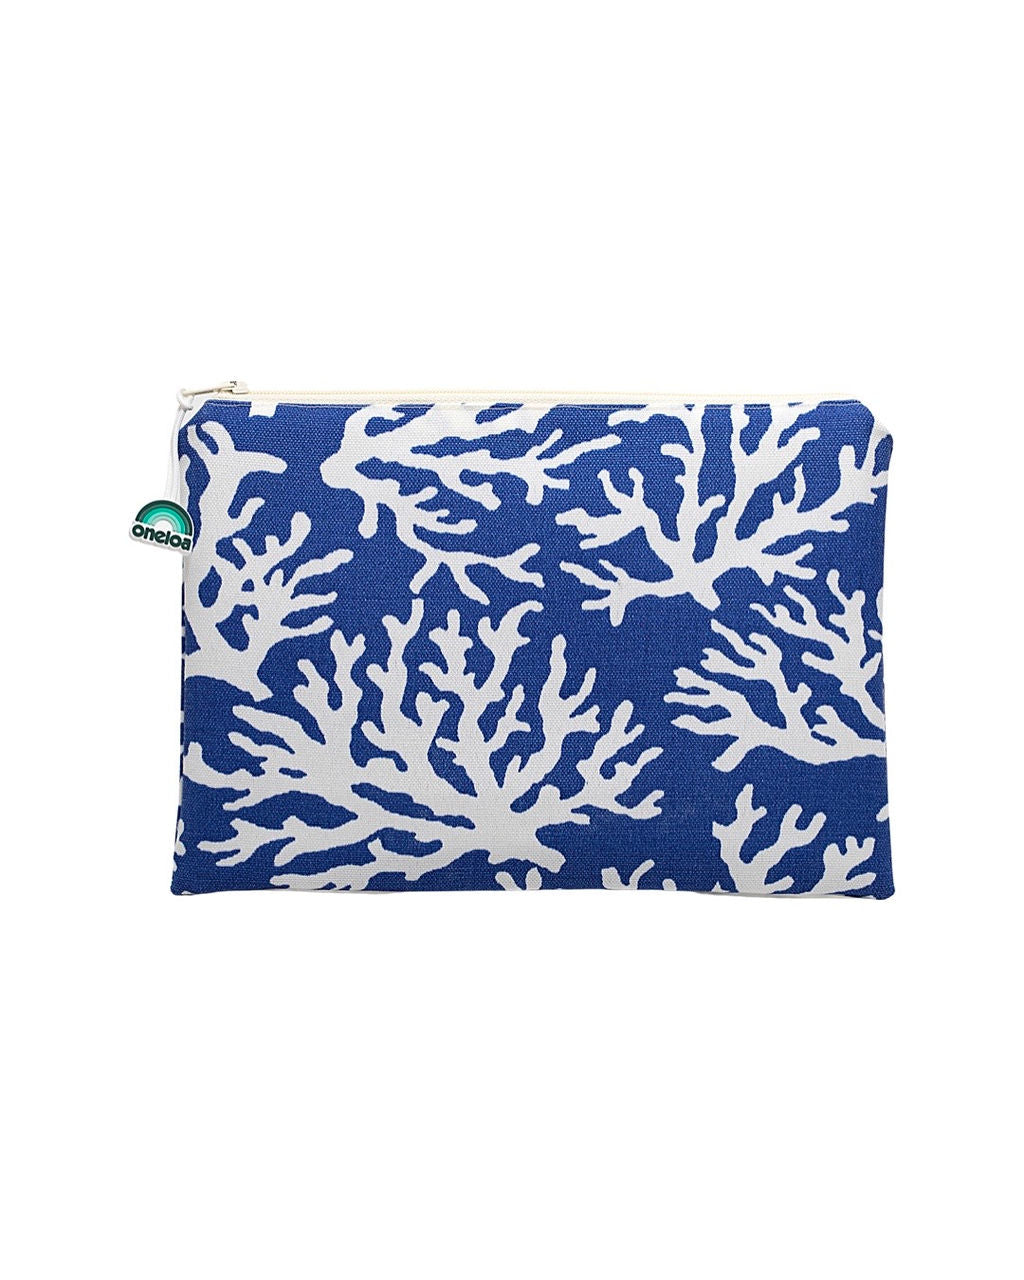 Oneloa Dark Blue Coral Clutch Size Wet/Dry Bag